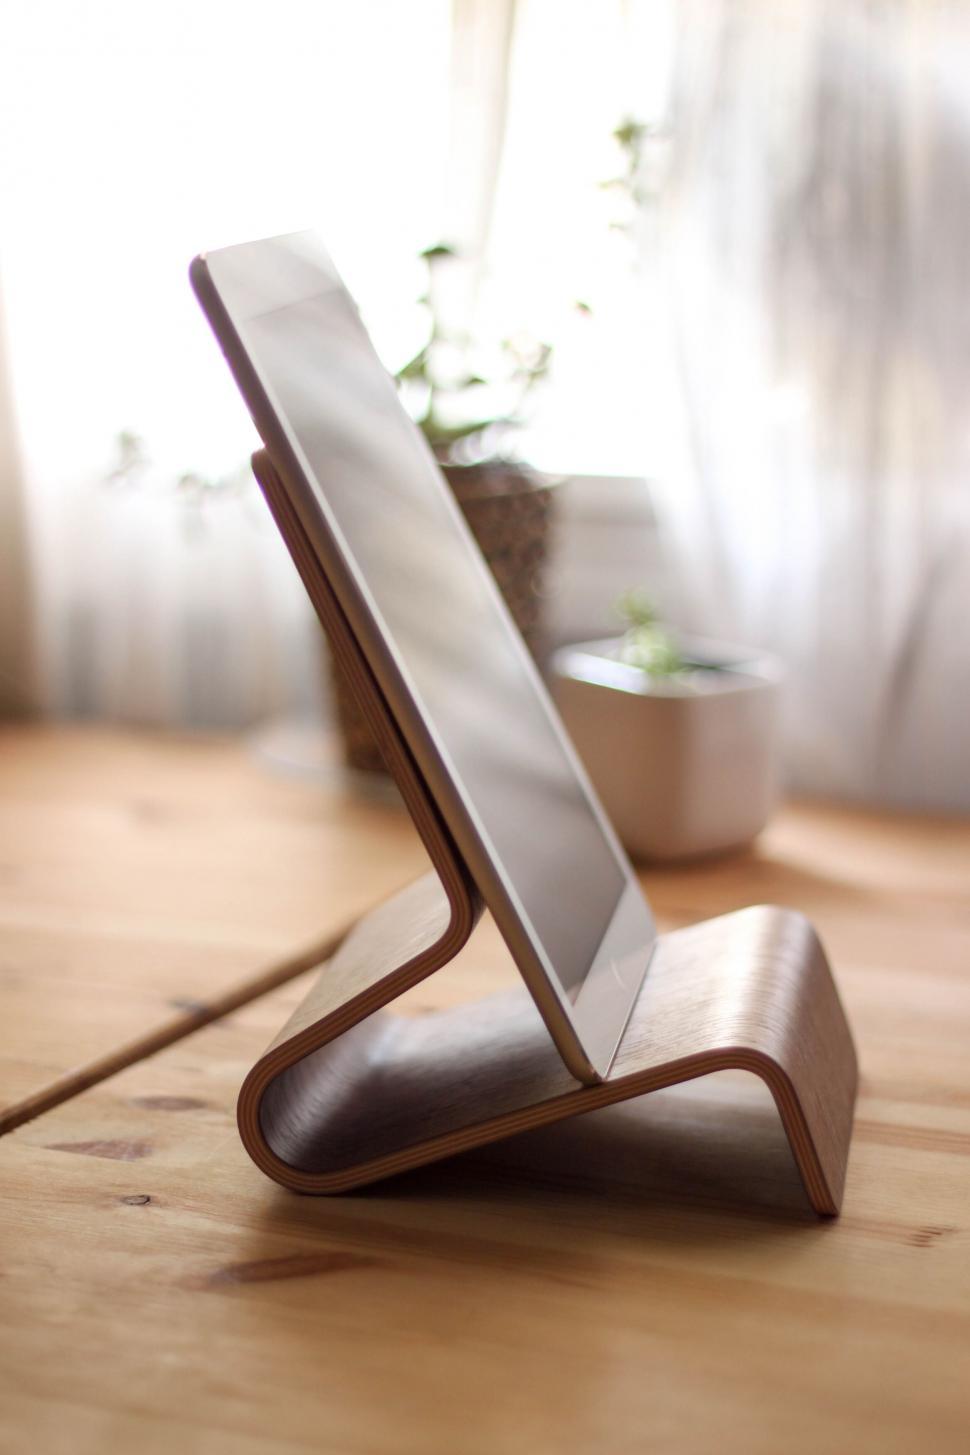 Free Image of Elegant wooden tablet stand on a desk 